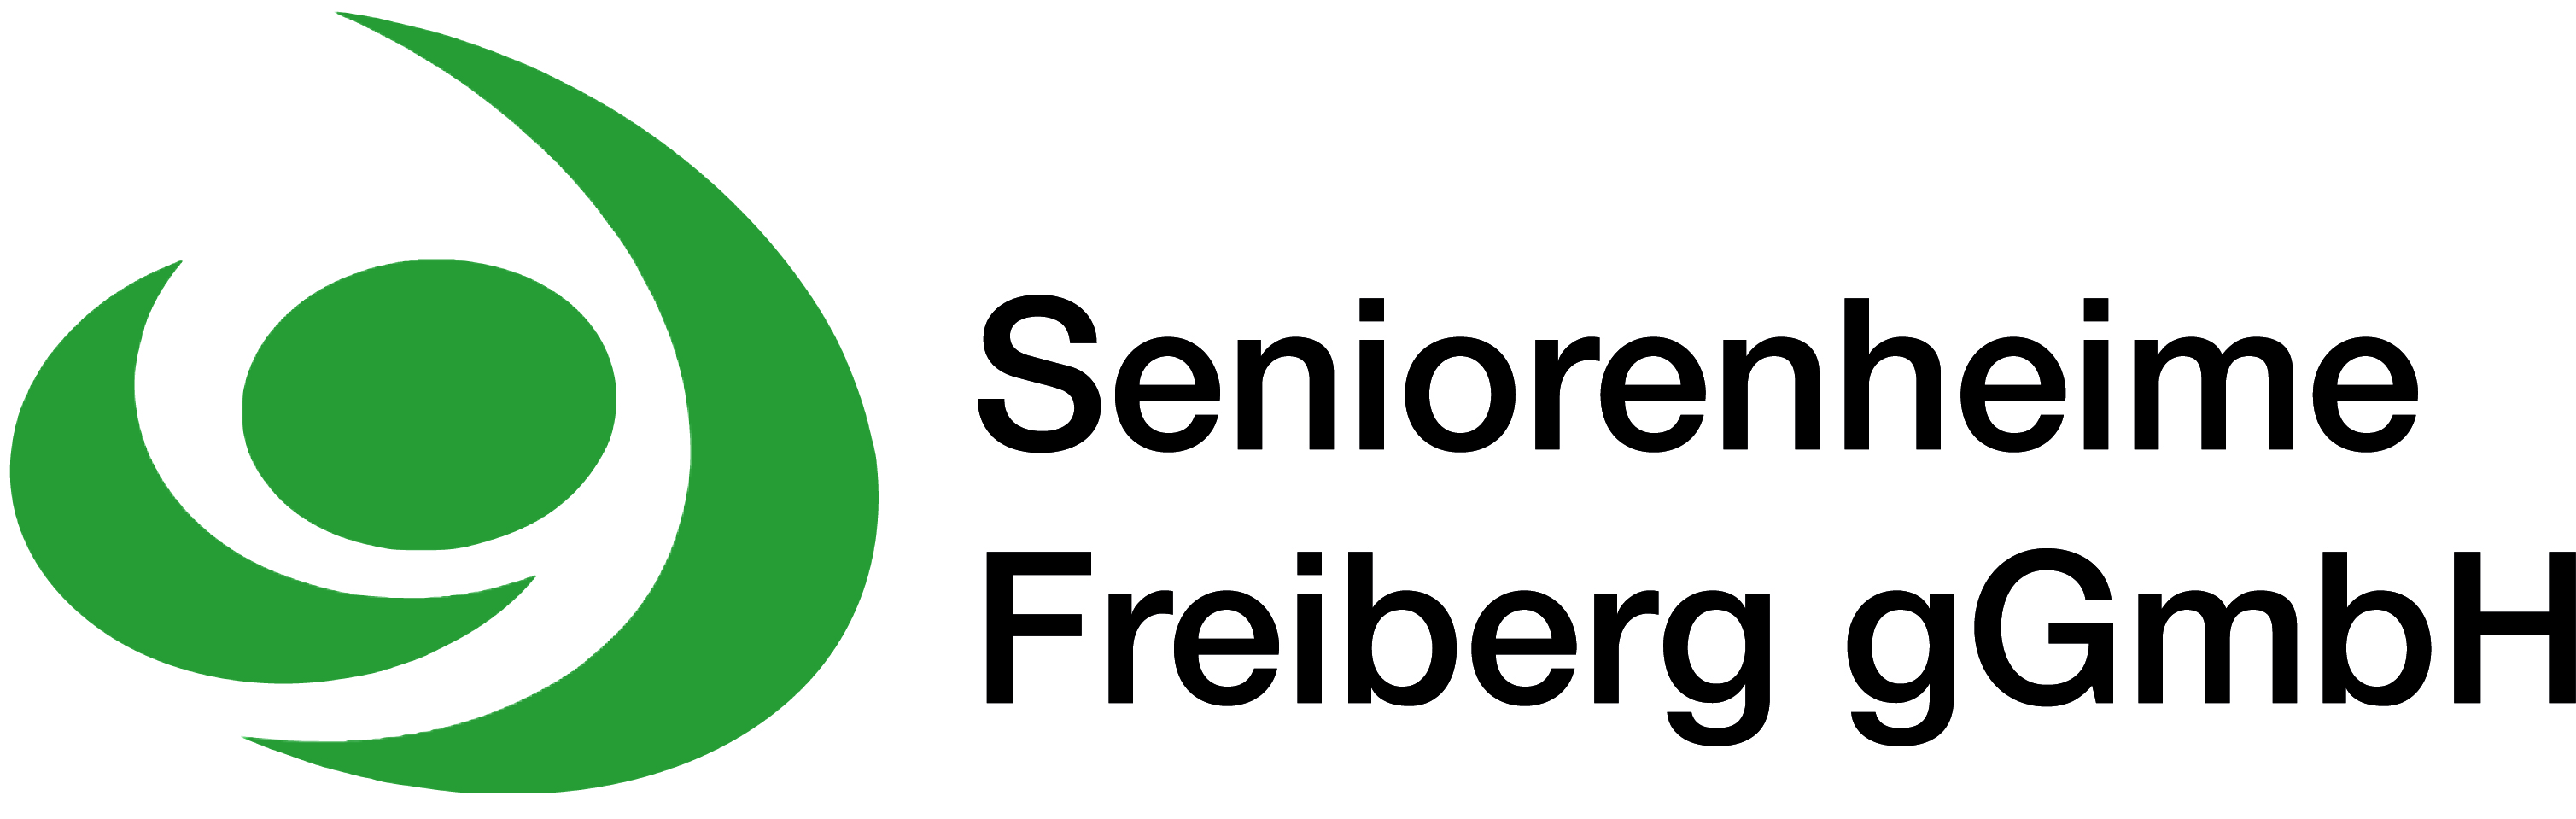 Seniorenheime Freiberg gGmbH